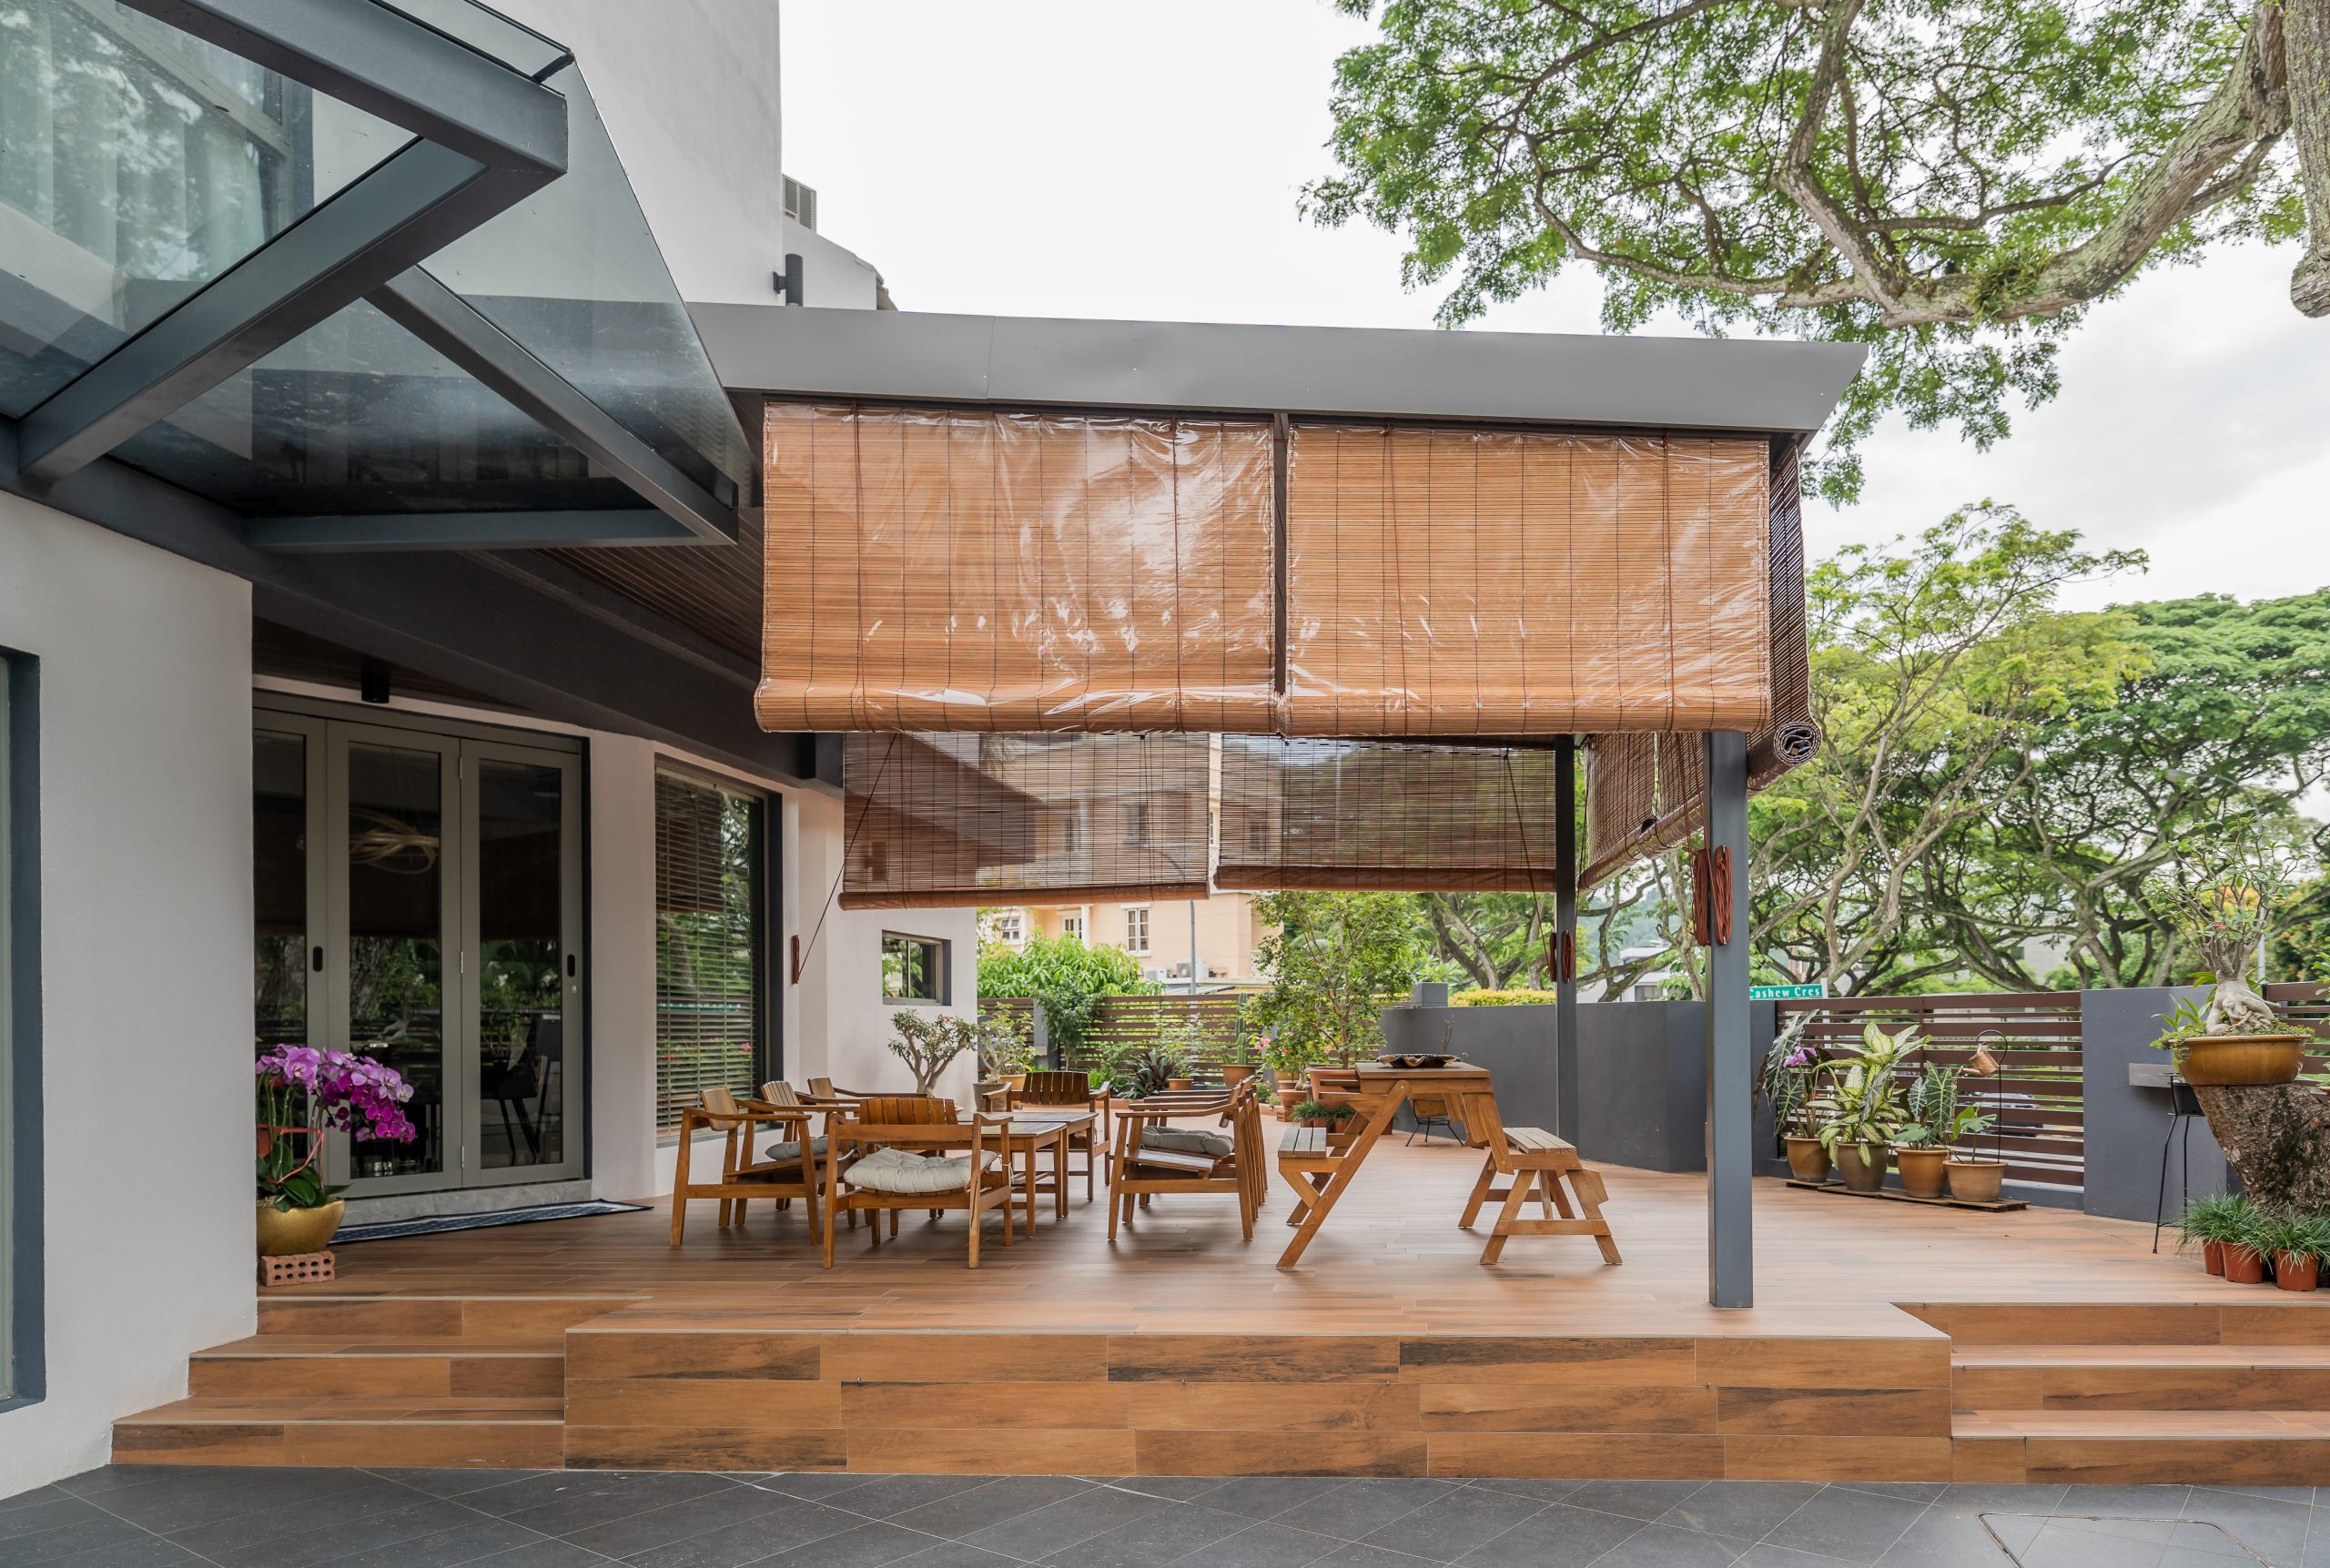 Landed House at Bukit Panjang: Designed by Shawn Haw+Grace Mao Yi